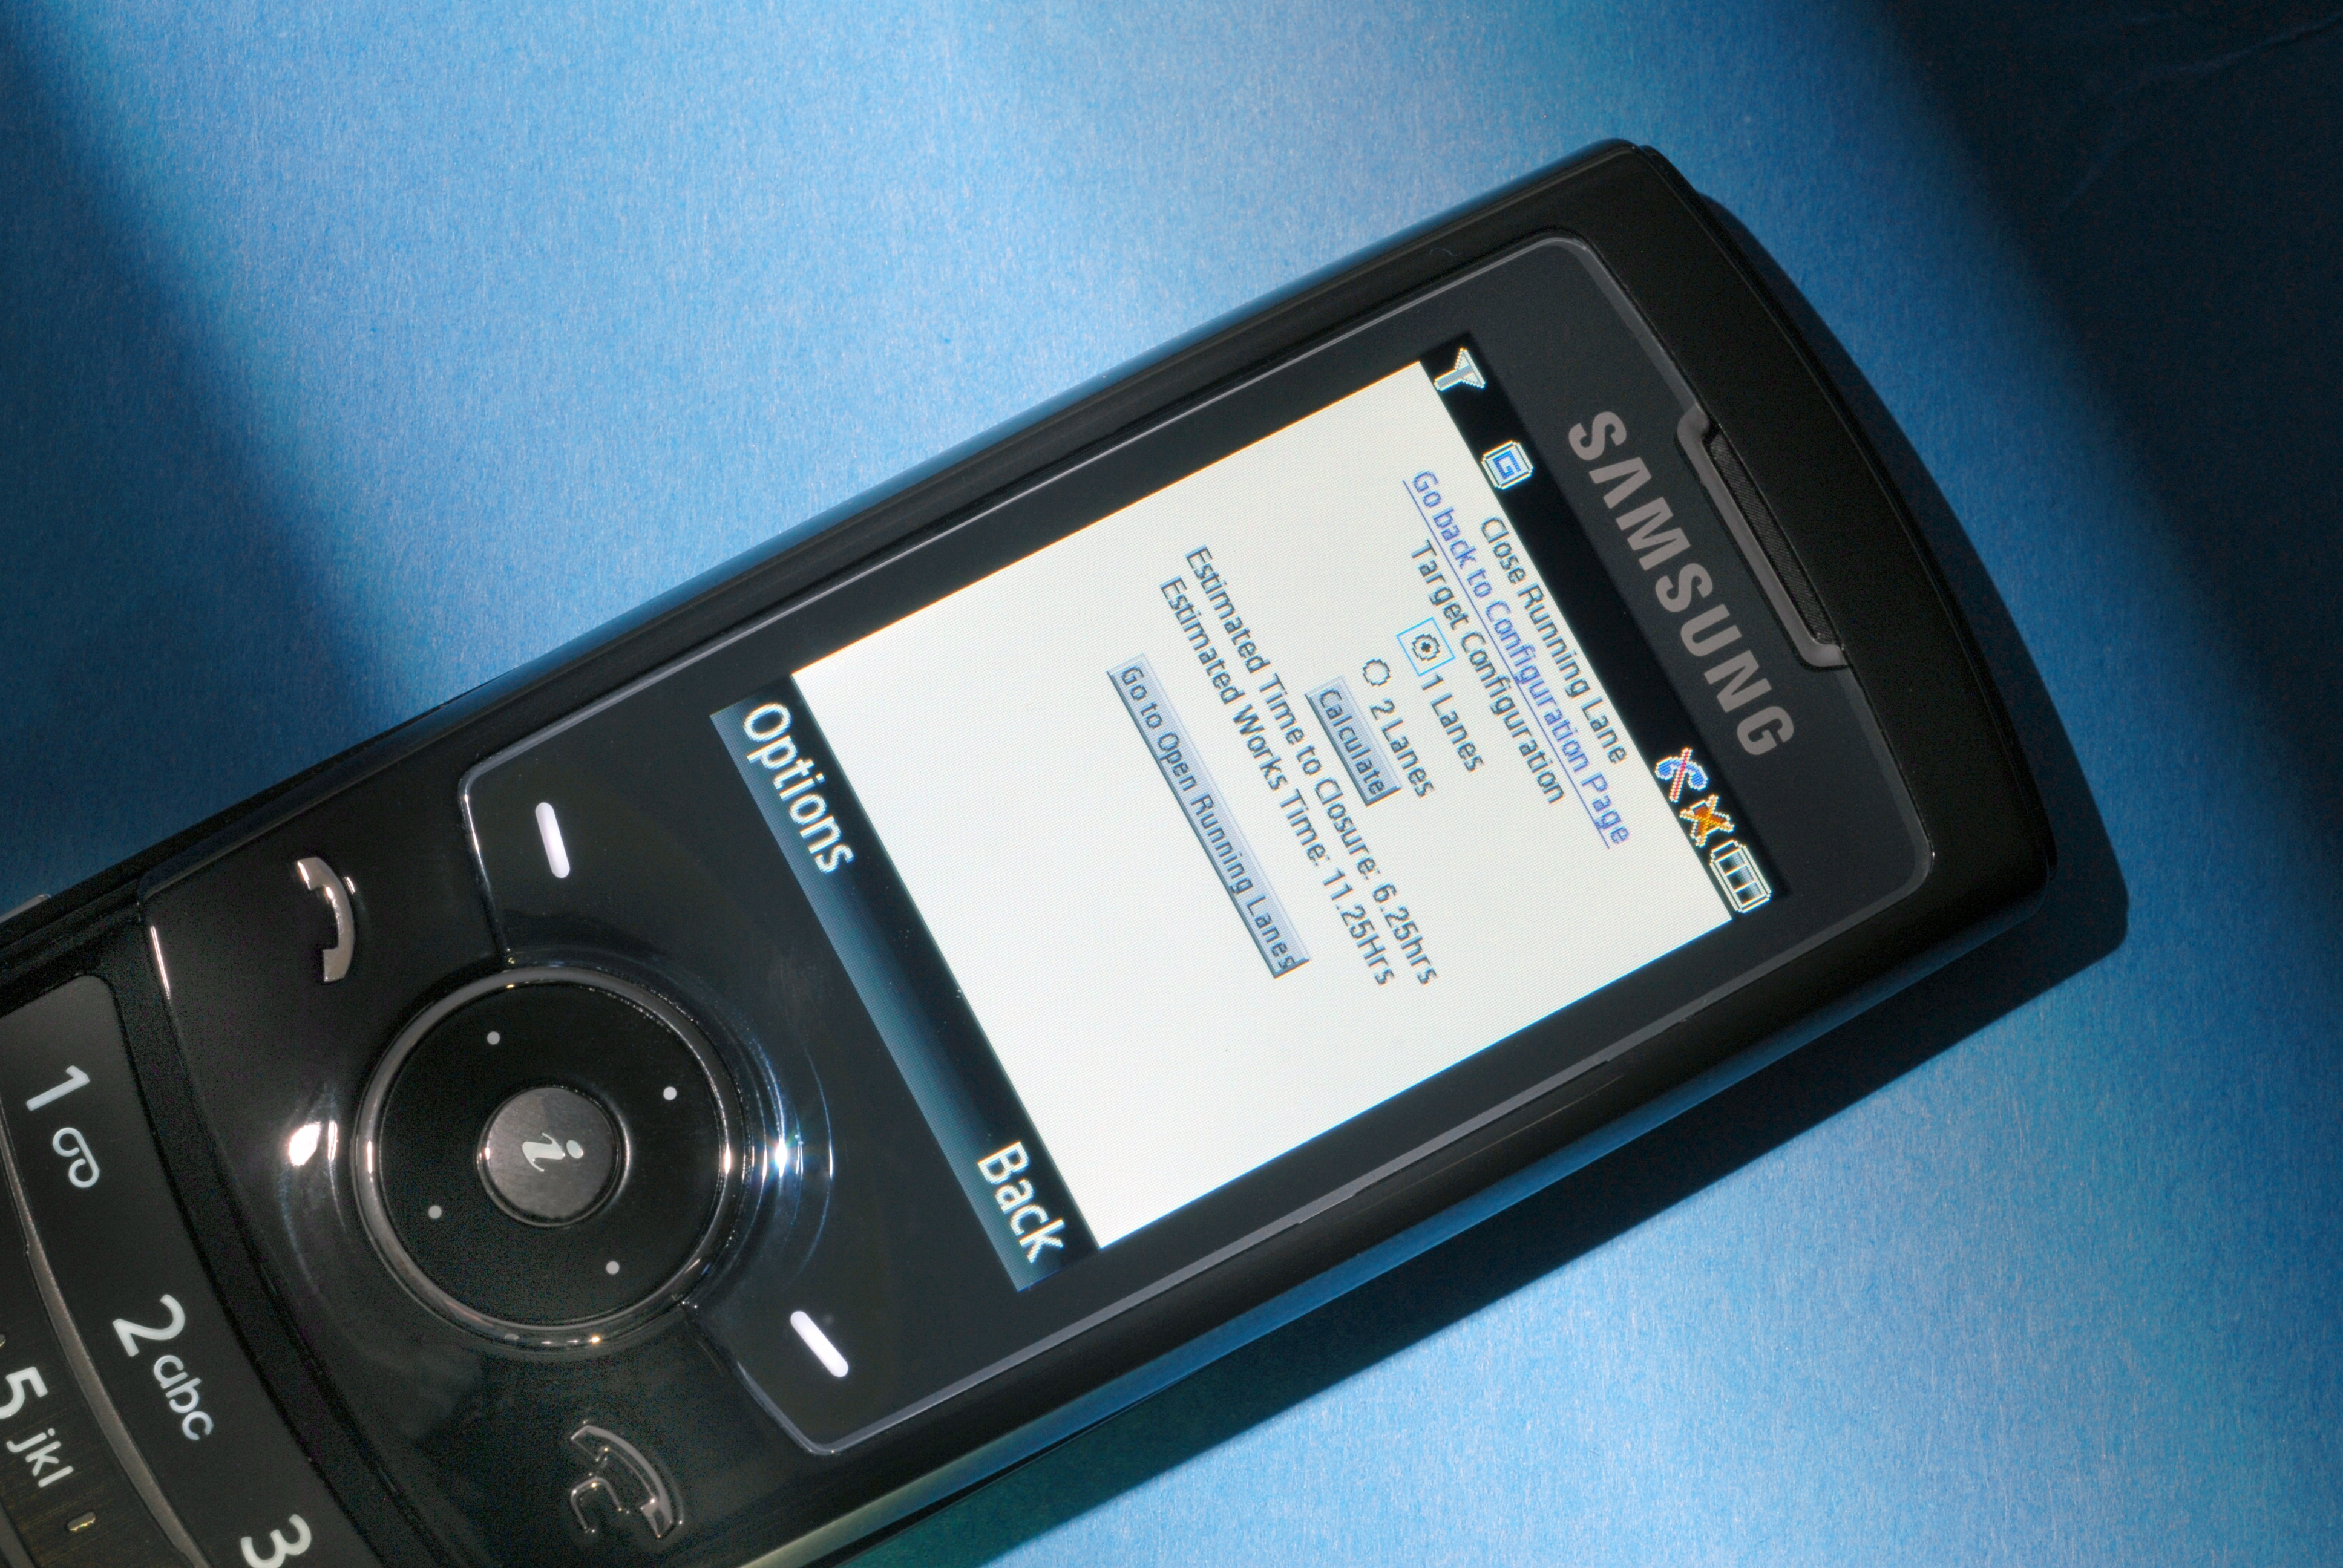 Samsung mobile phone 